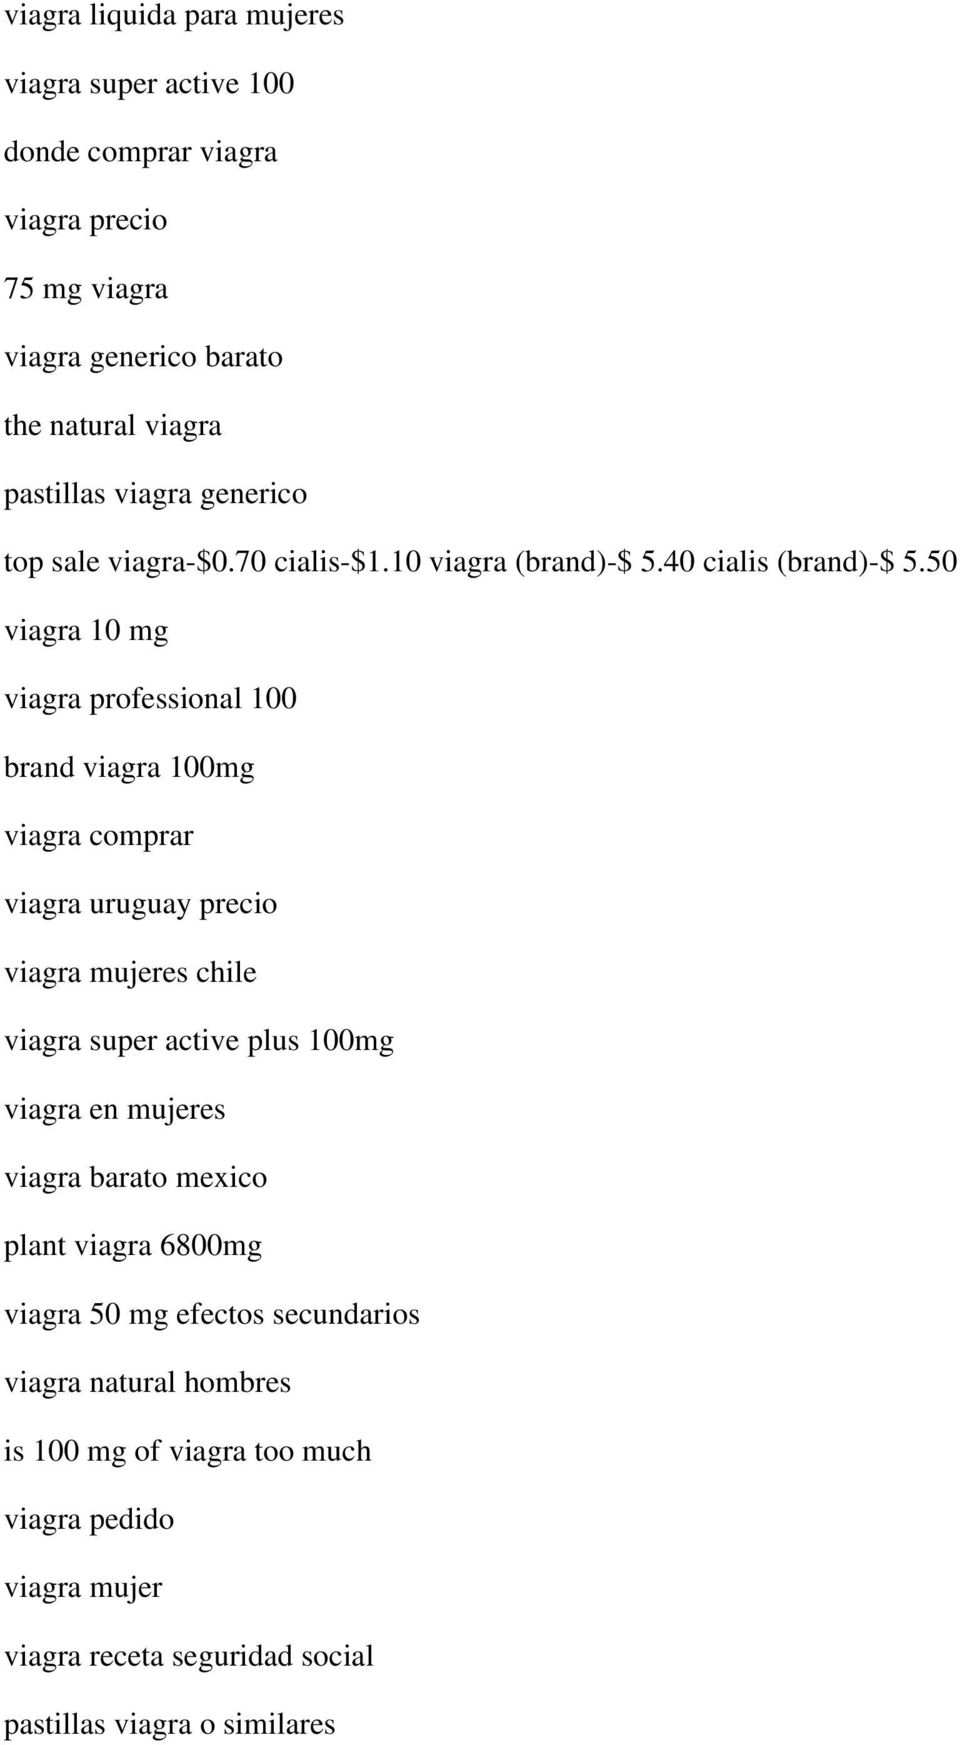 50 viagra 10 mg viagra professional 100 brand viagra 100mg viagra comprar viagra uruguay precio viagra mujeres chile viagra super active plus 100mg viagra